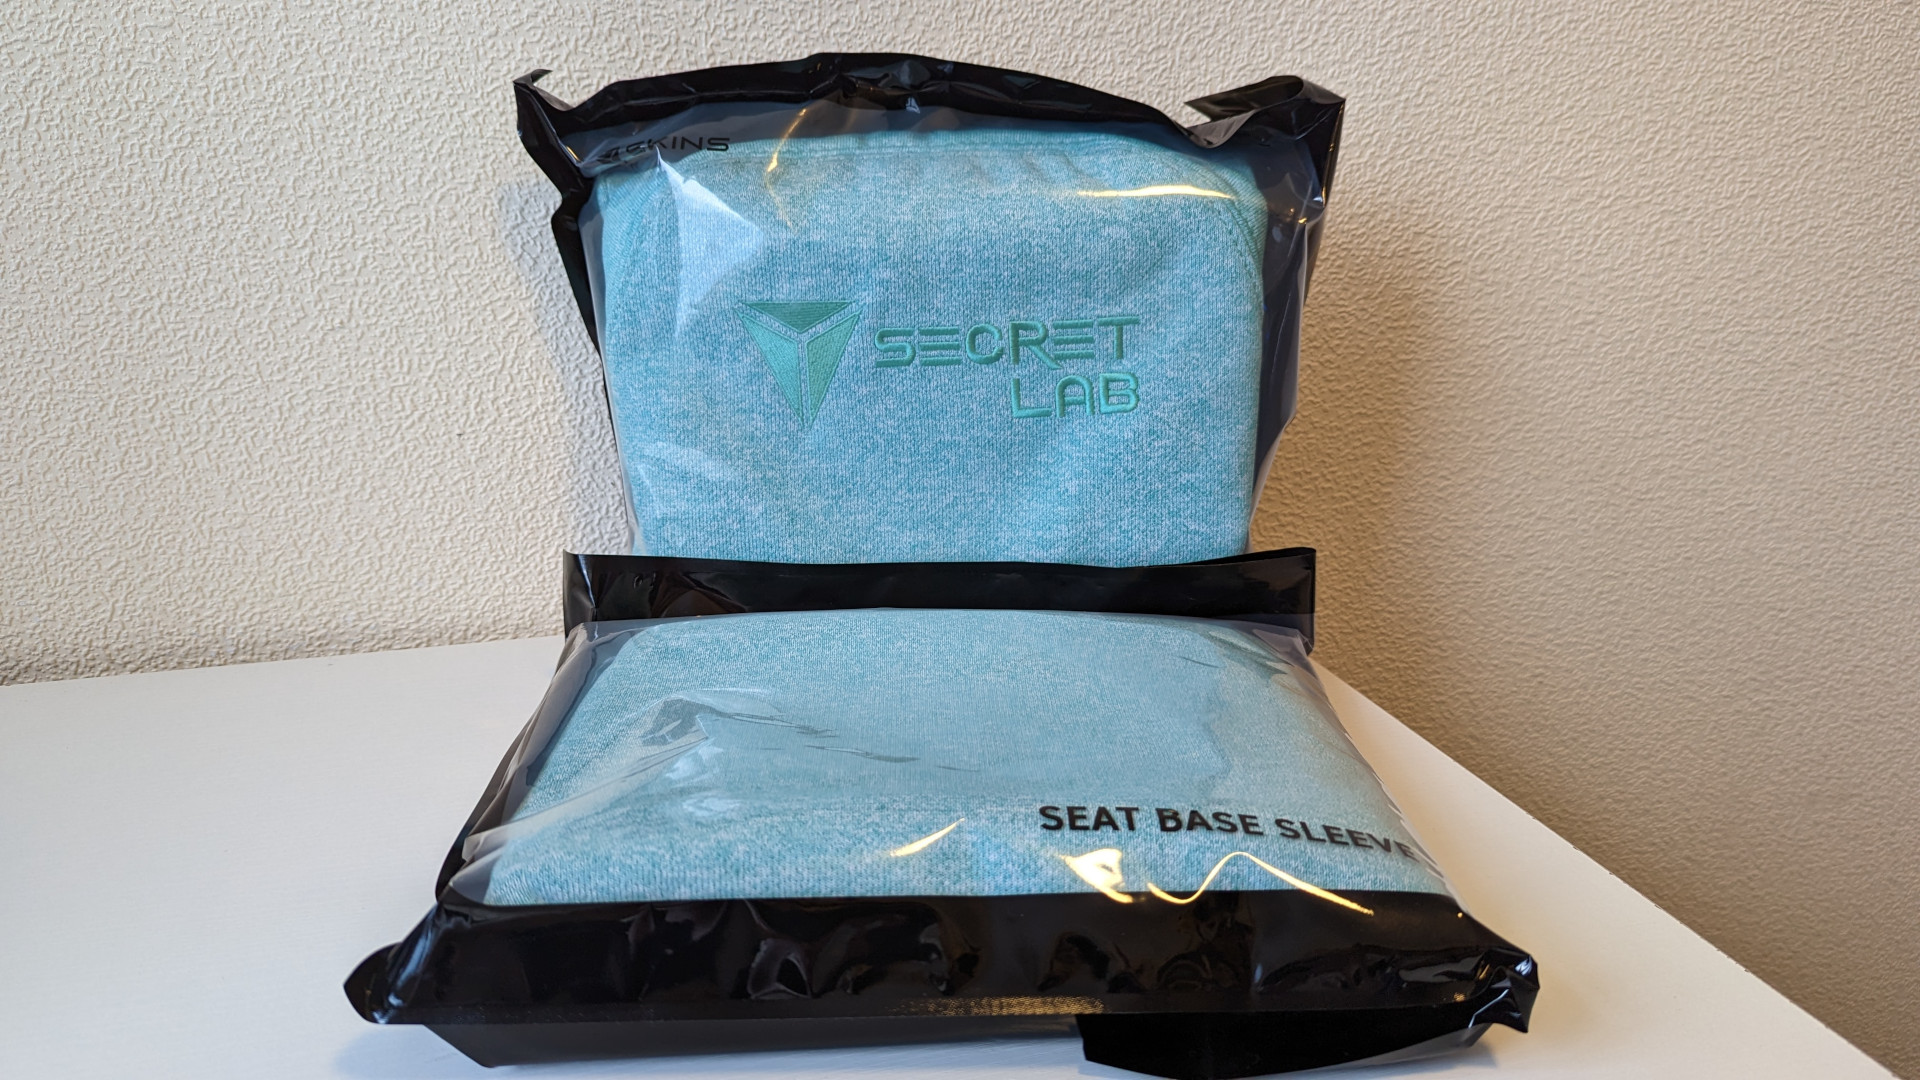 The Secretlab Chair Skin back and base sleeves, in their plastic packaging